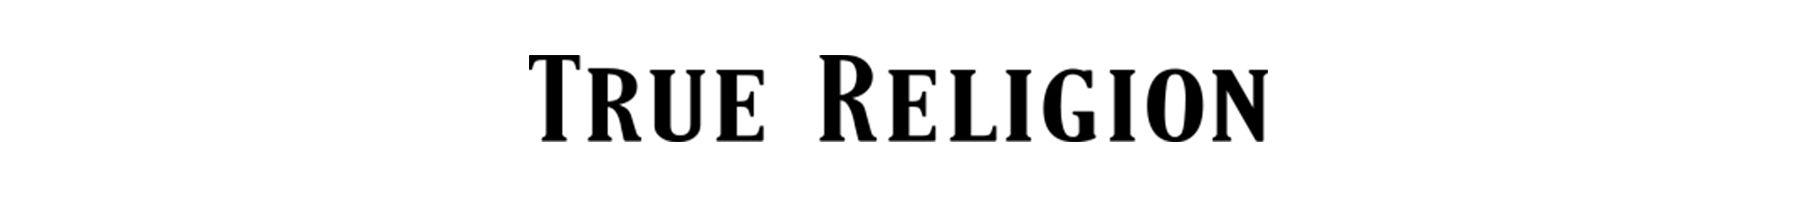 New True Religion Logo - Shop & Find Men's True Religion Clothing And Fashion At DrJays.com